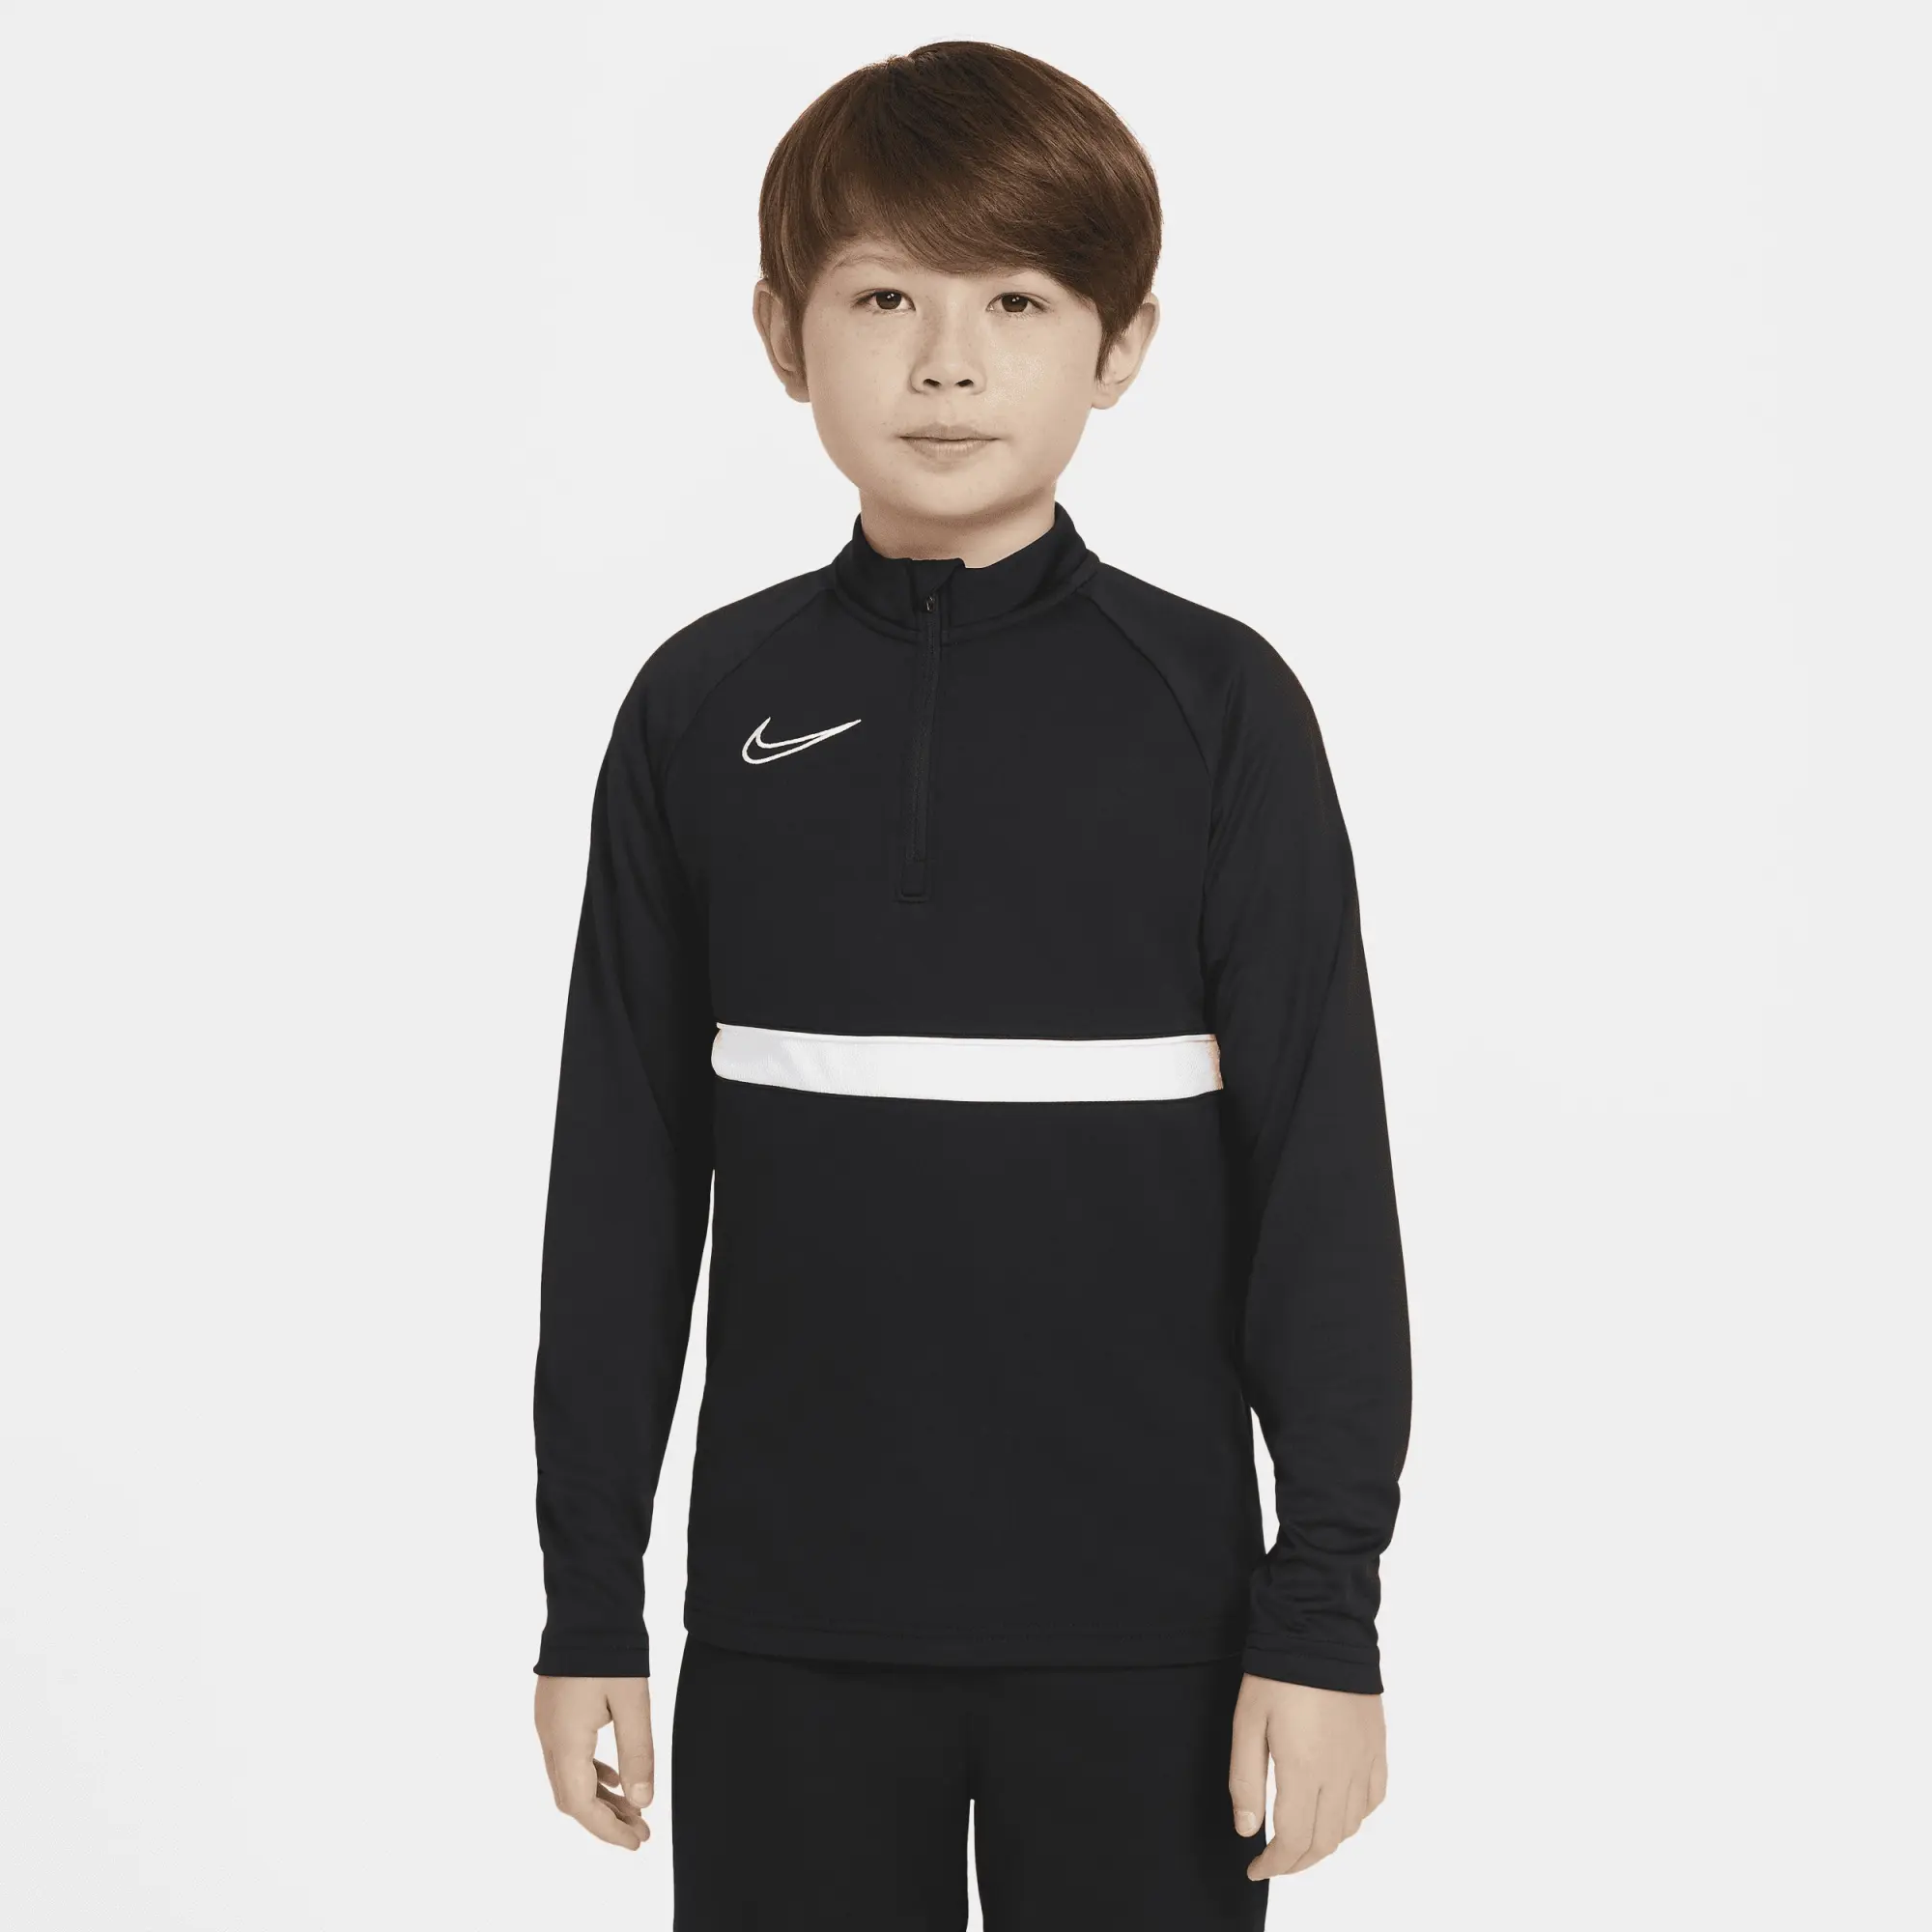 Nike Academy Layer Top Junior Boys